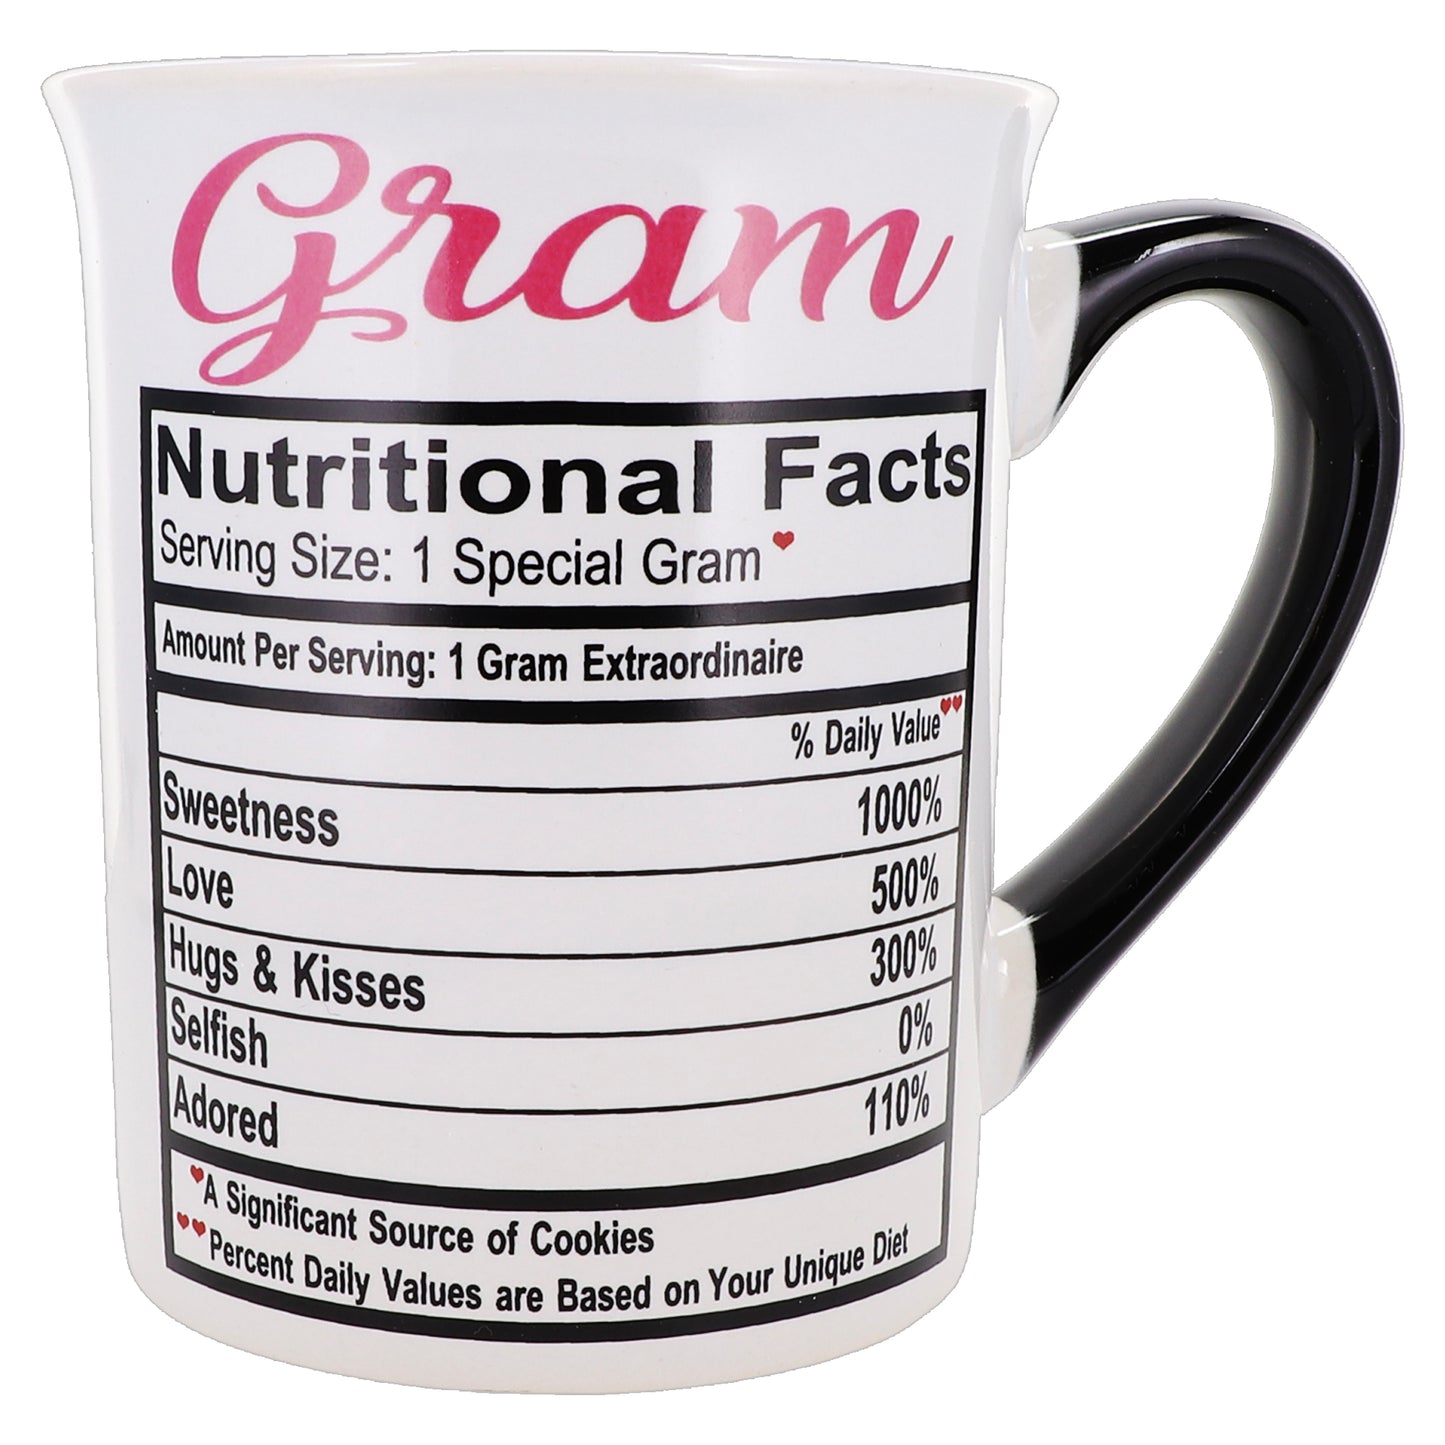 Cottage Creek Gram Mug, Gram Coffee Mug for Gram, 16oz., 6" Multicolored